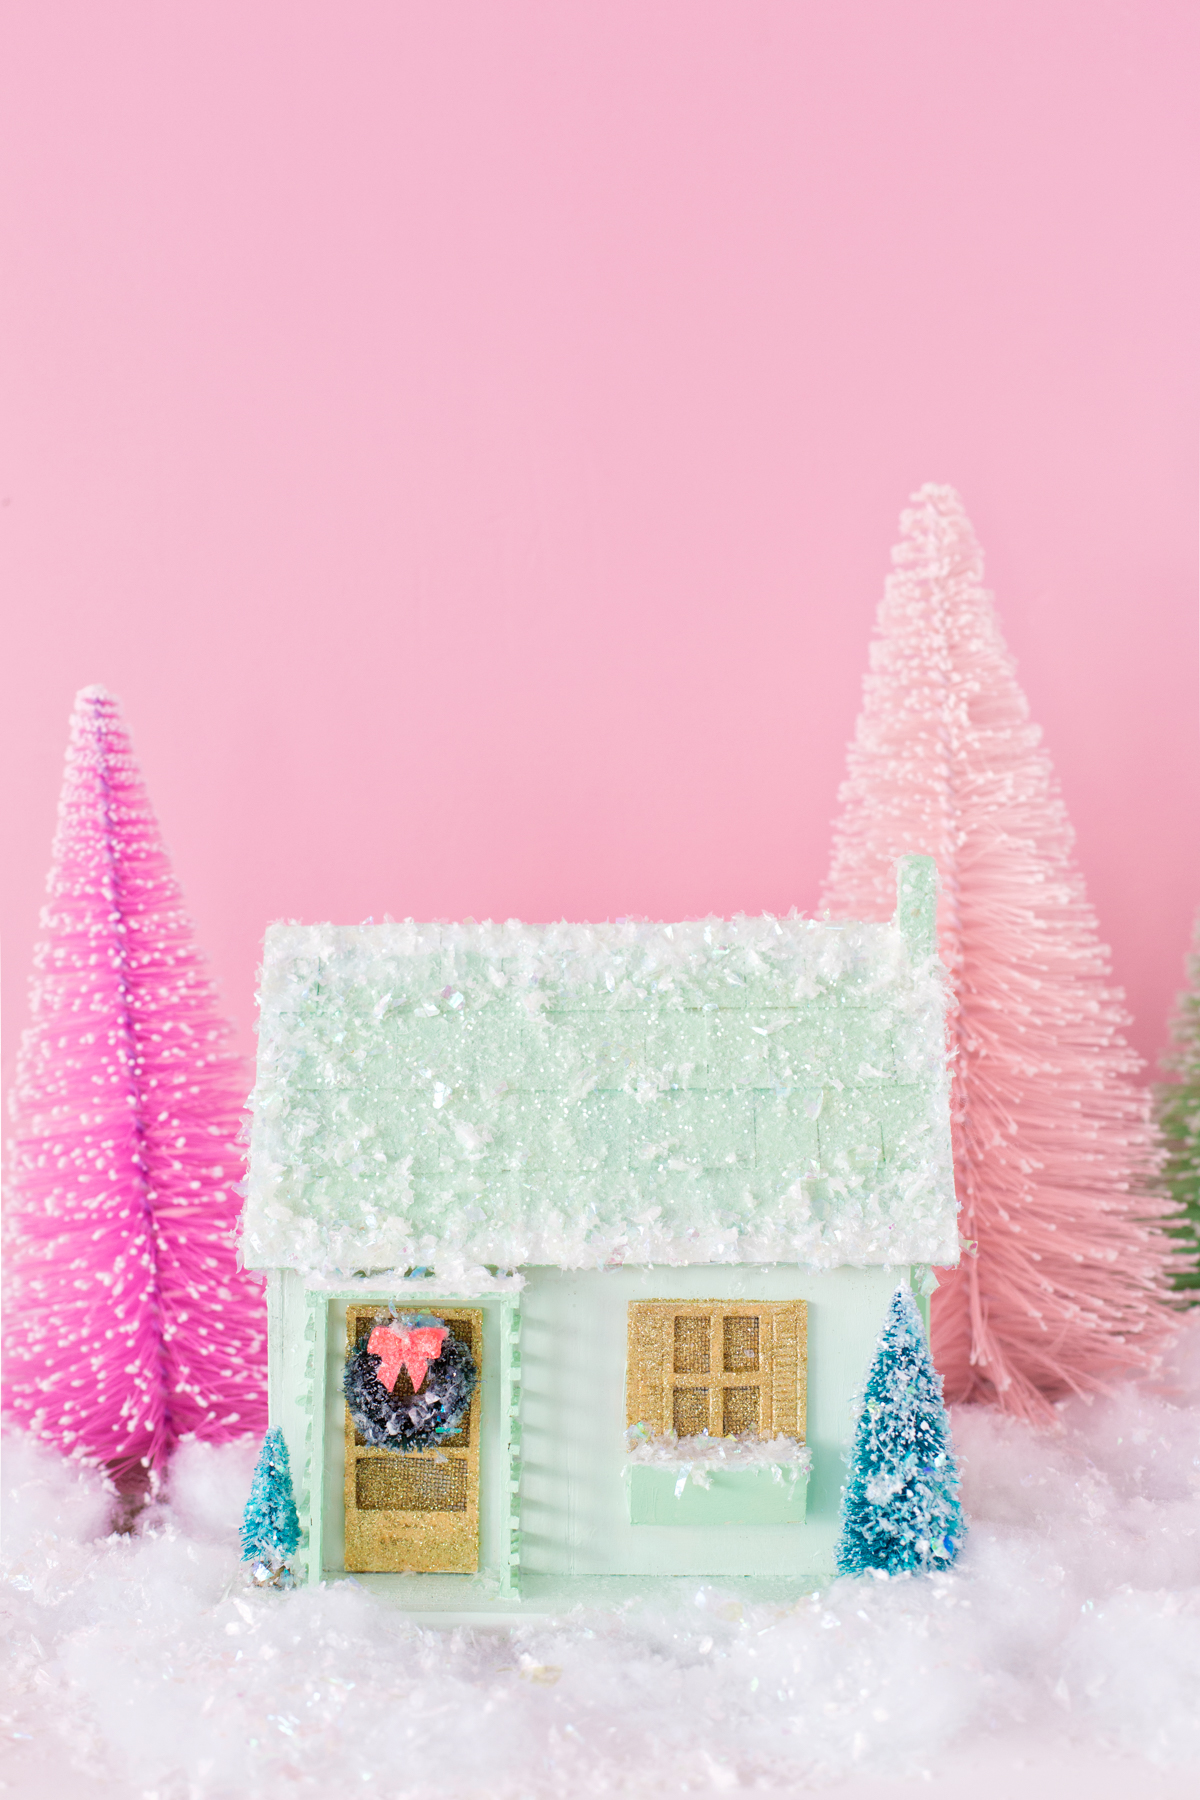 DIY Colorful Christmas Village